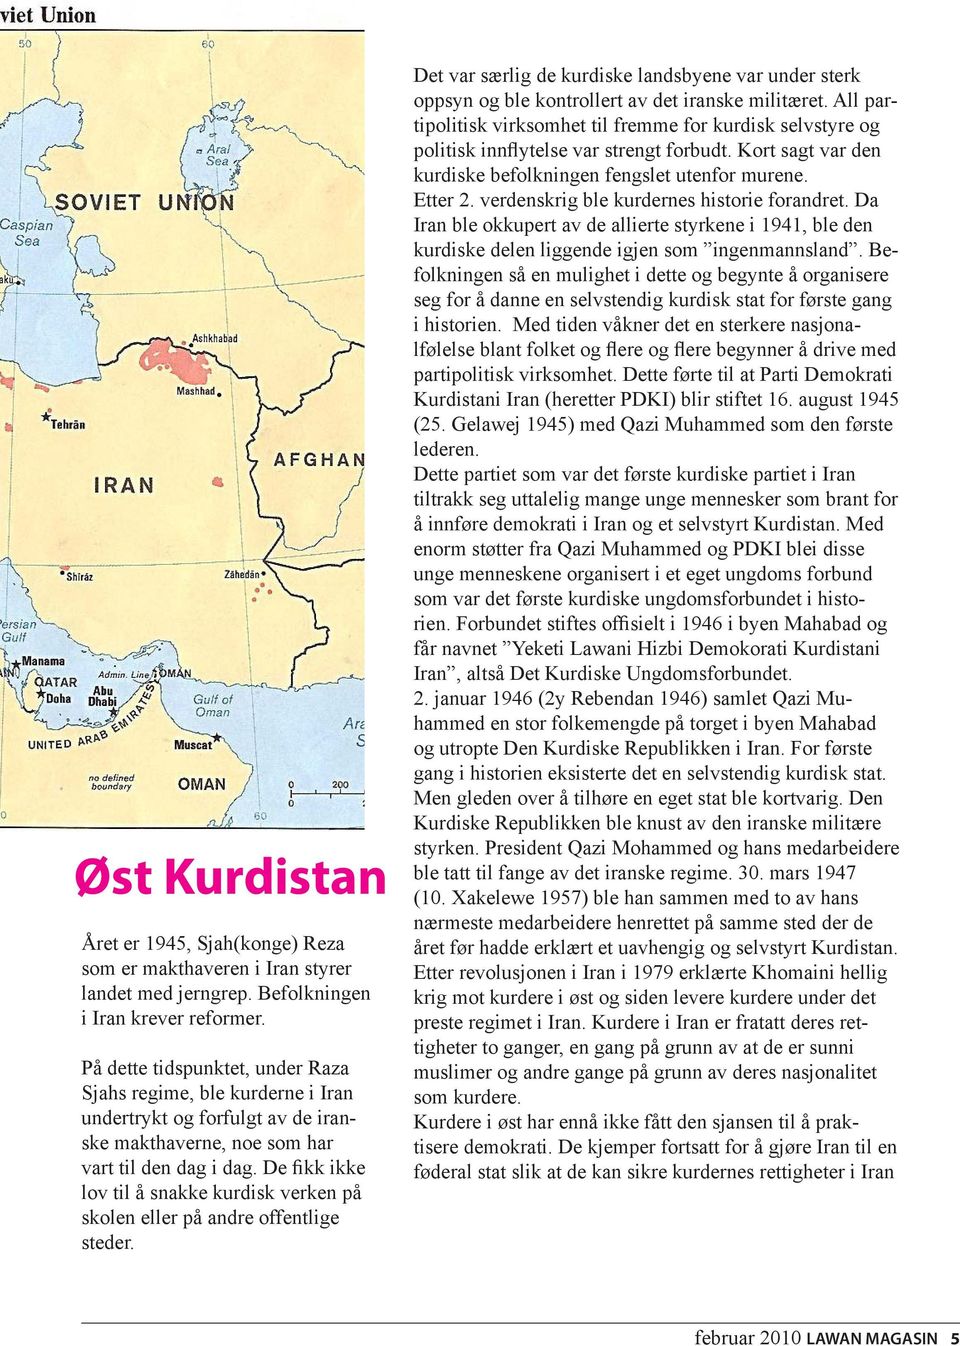 organisert i et eget ungdoms forbund som var det første kurdiske ungdomsforbundet i histo- - krig mot kurdere